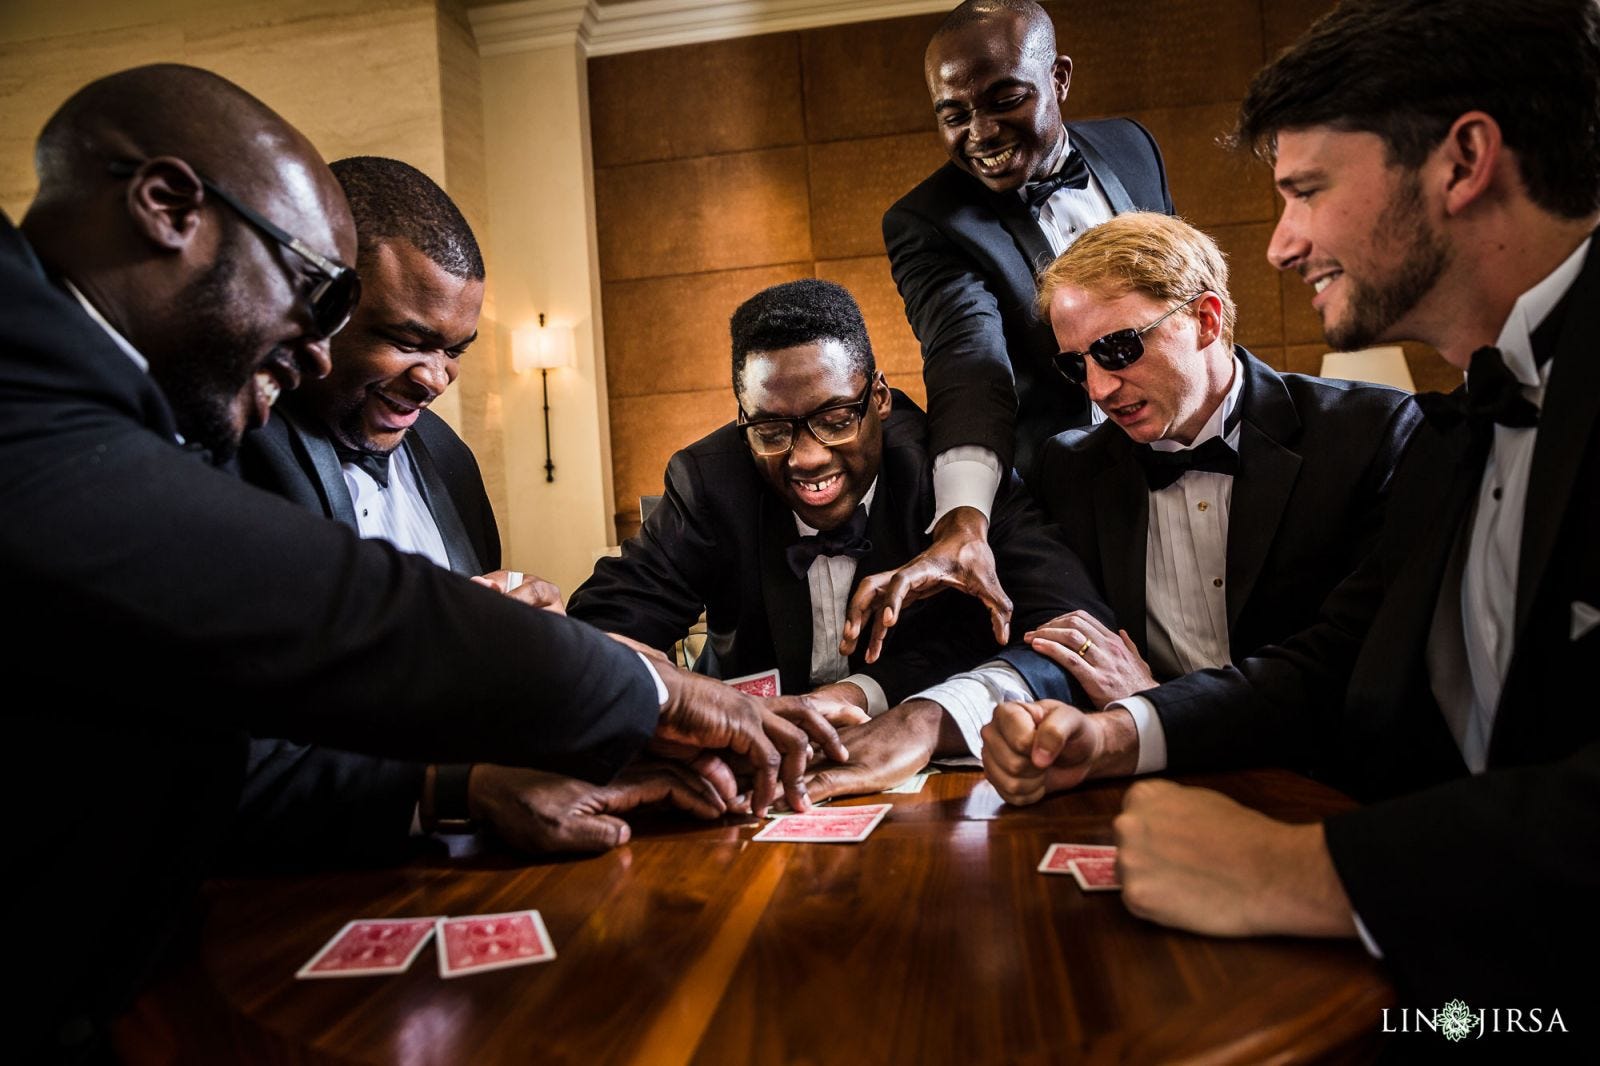 group photo poses for groomsmen poker game